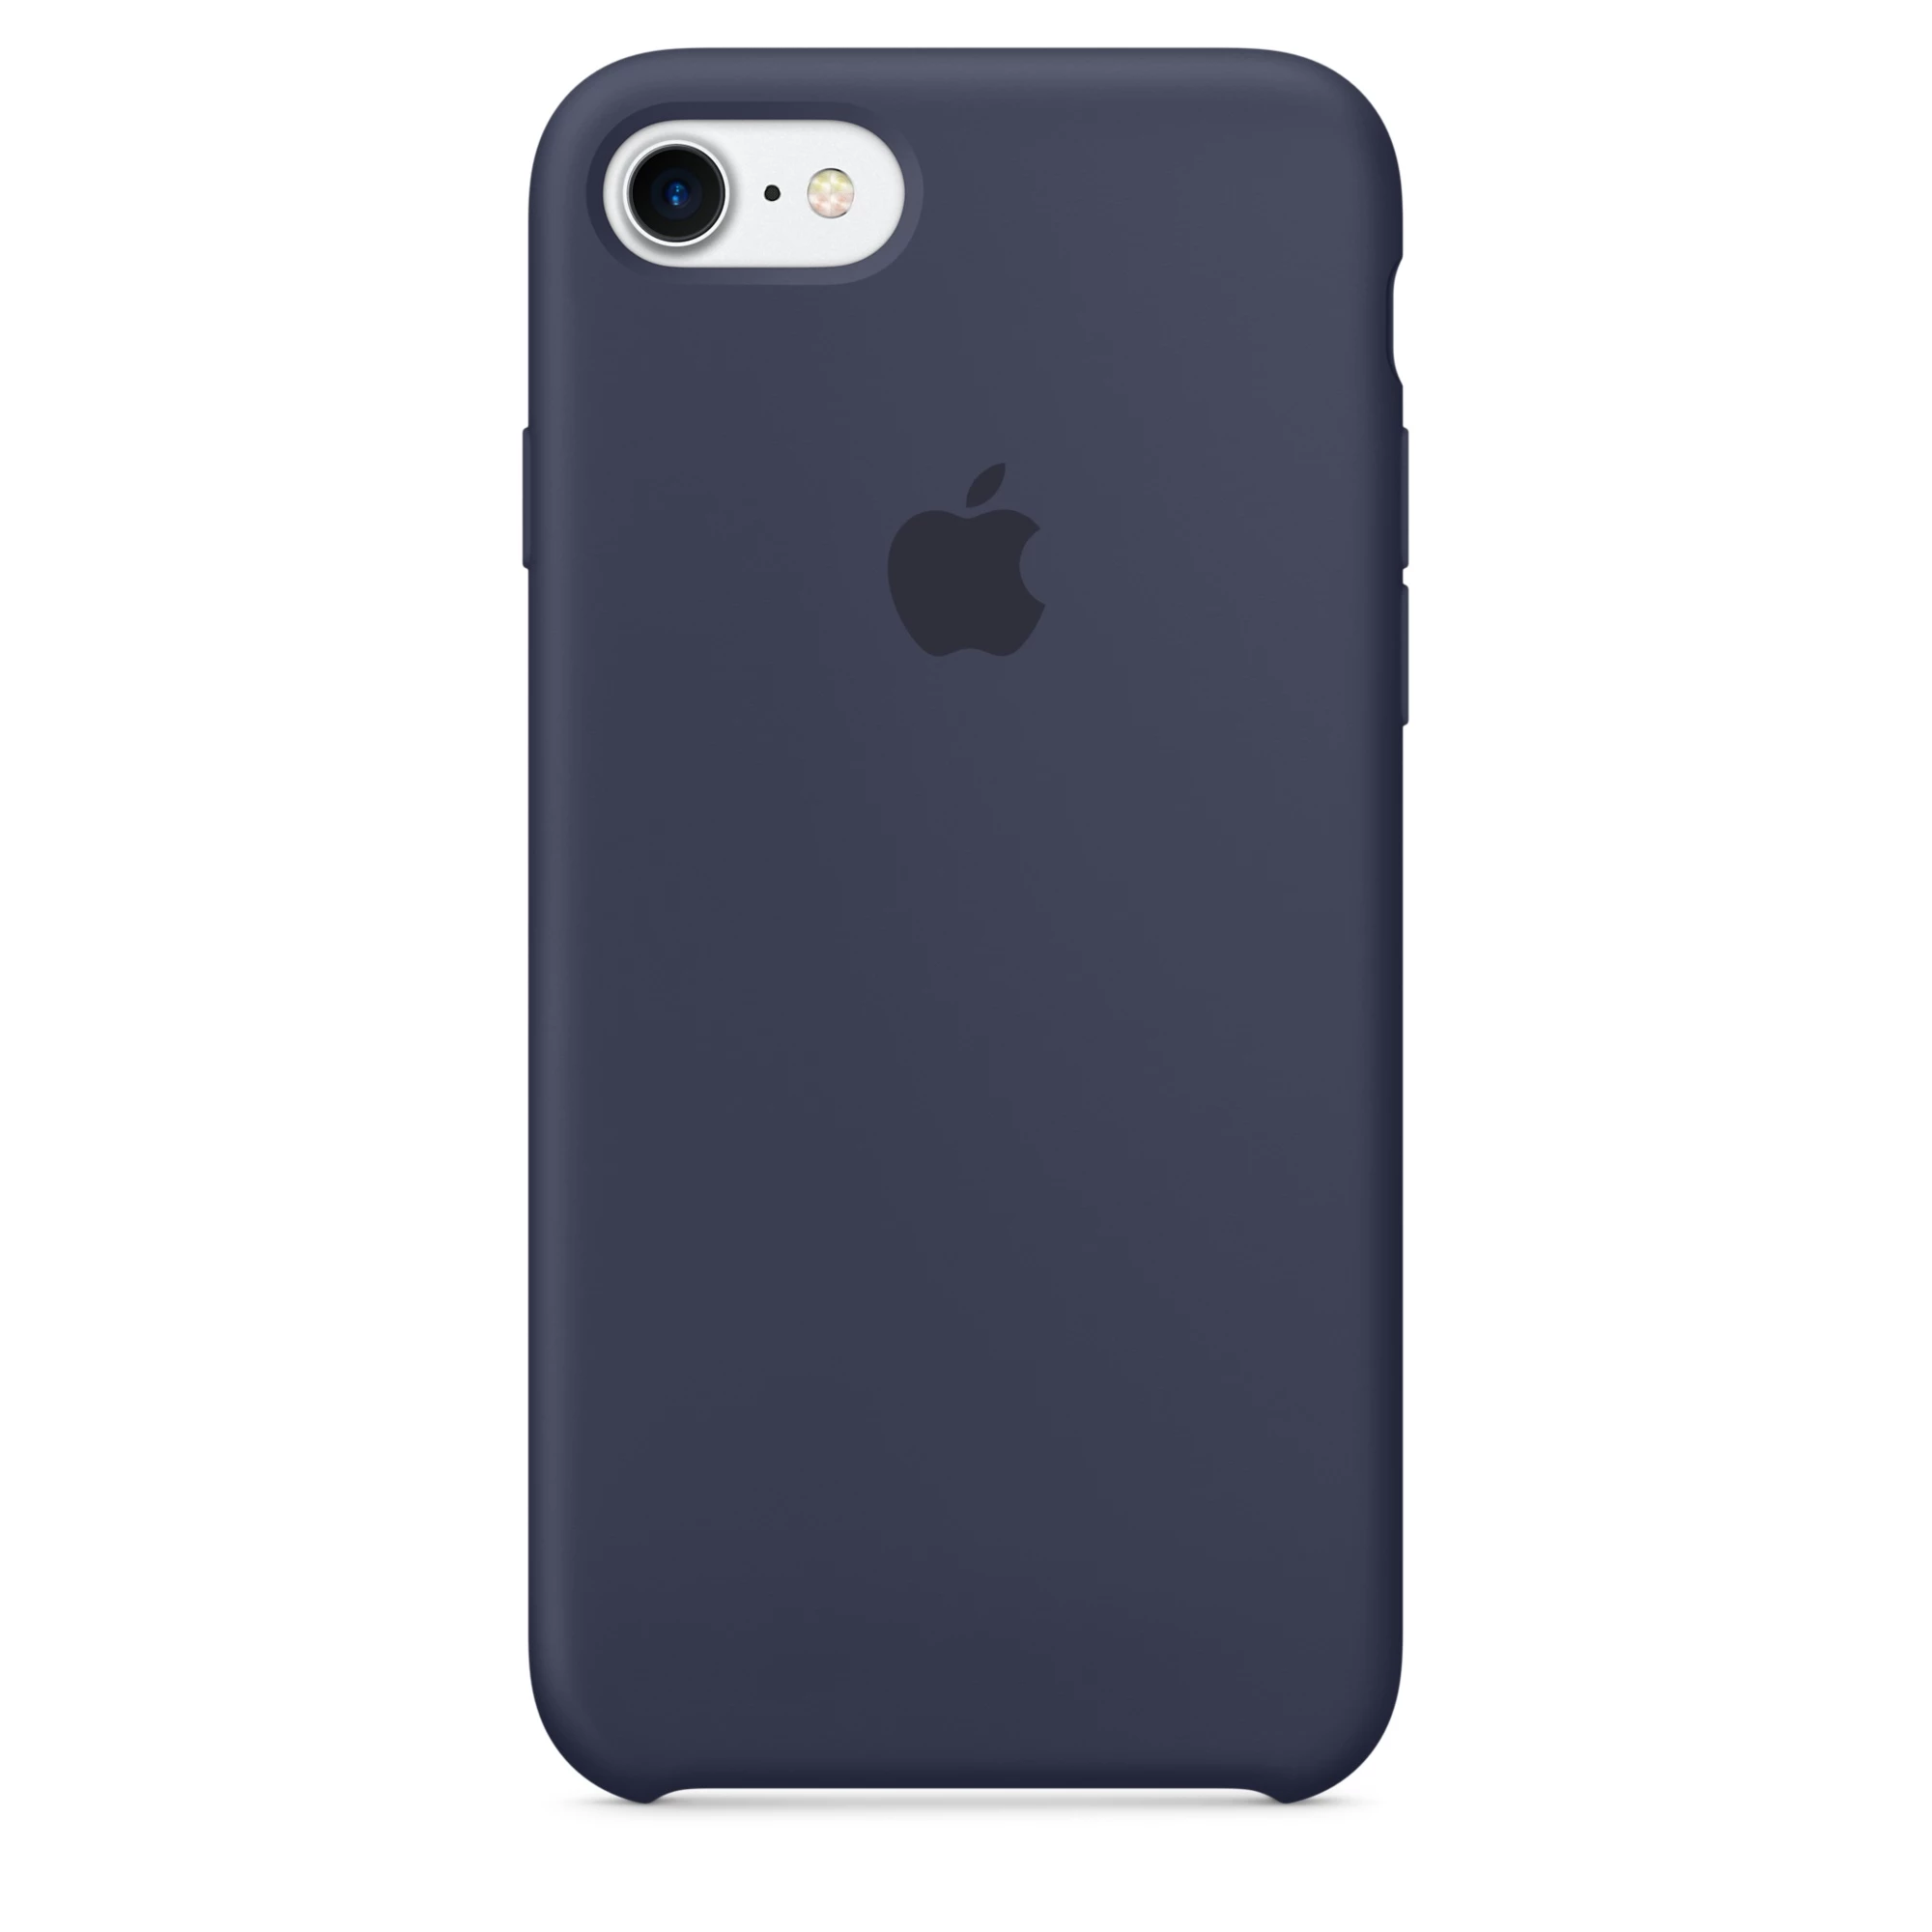 Apple iPhone 7/8 / SE-2 Silicone Case - Midnight Blue (MQGM2, MMWK2)